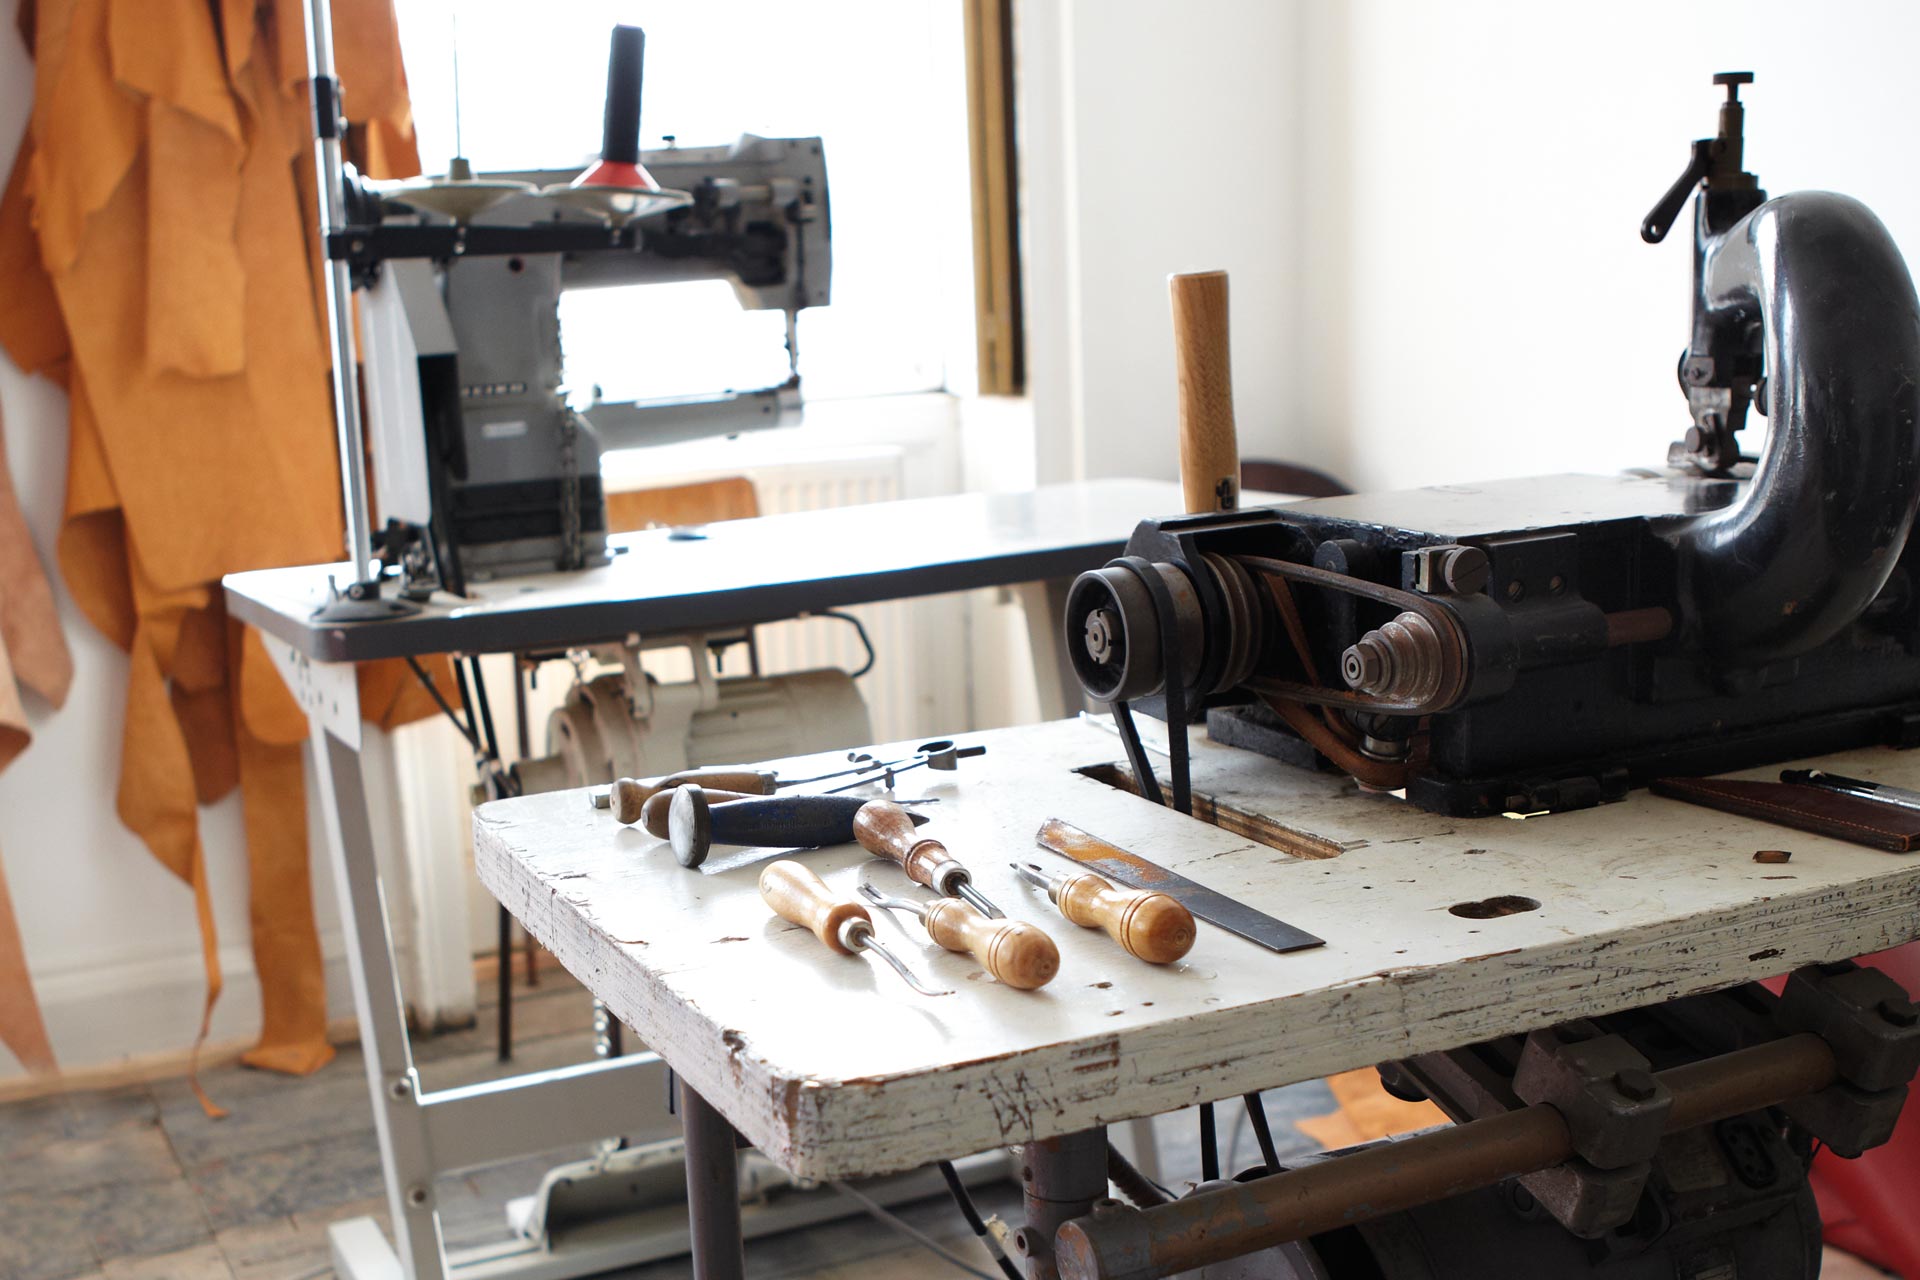 Bespoke & Bounds' Leather Working Studio